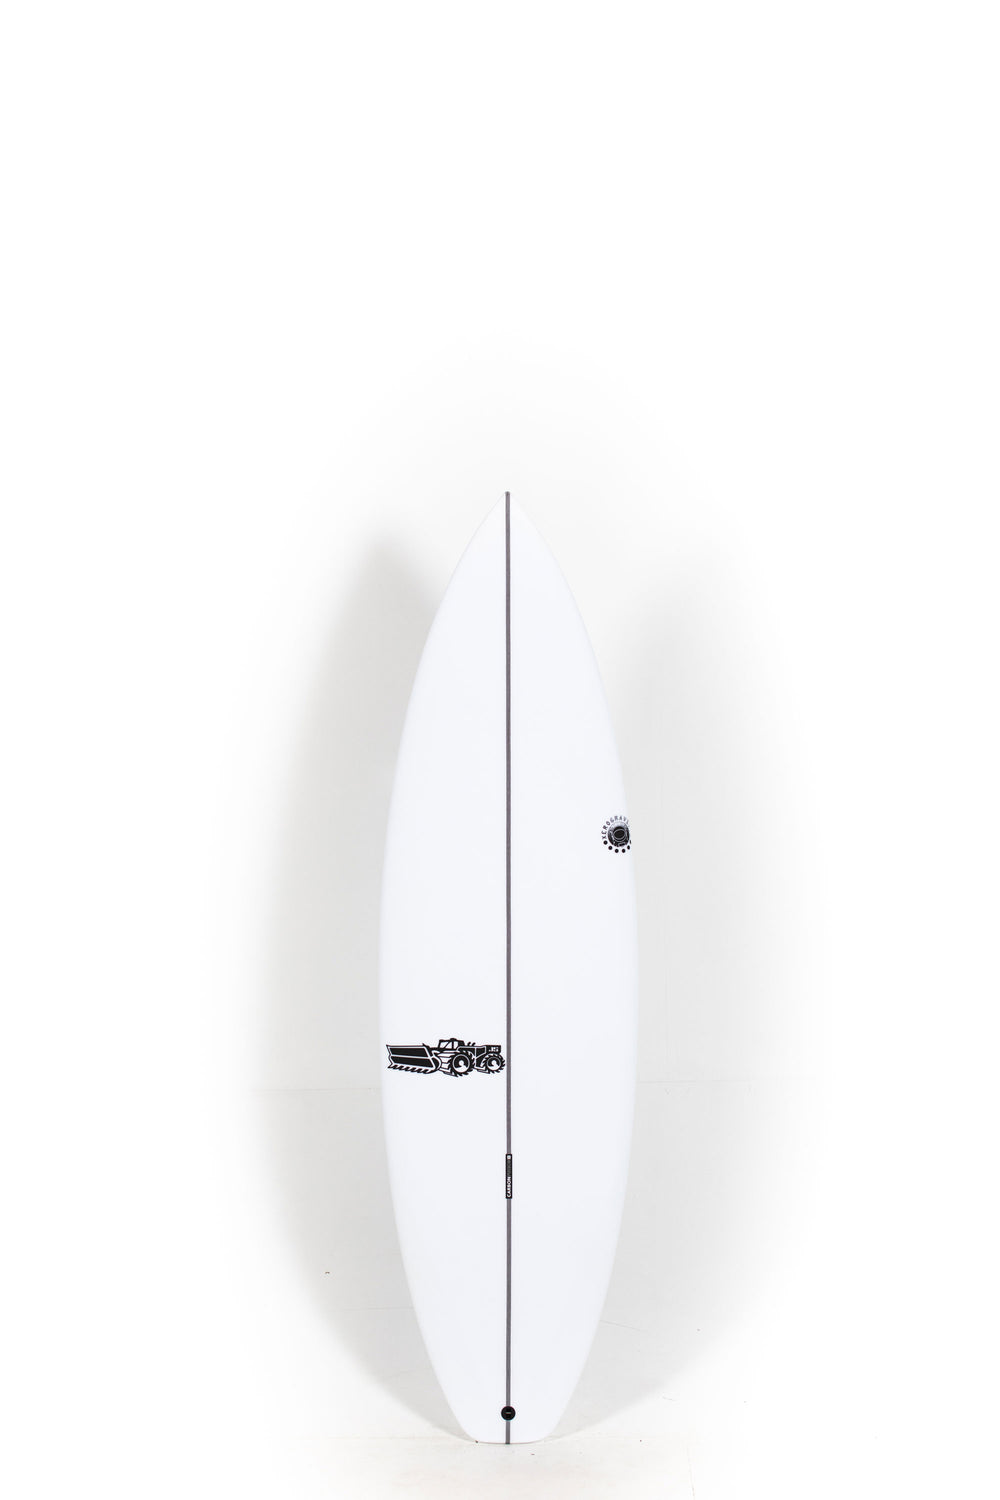 Pukas Surf Shop - JS Surfboards - XERO GRAVITY - 5'9